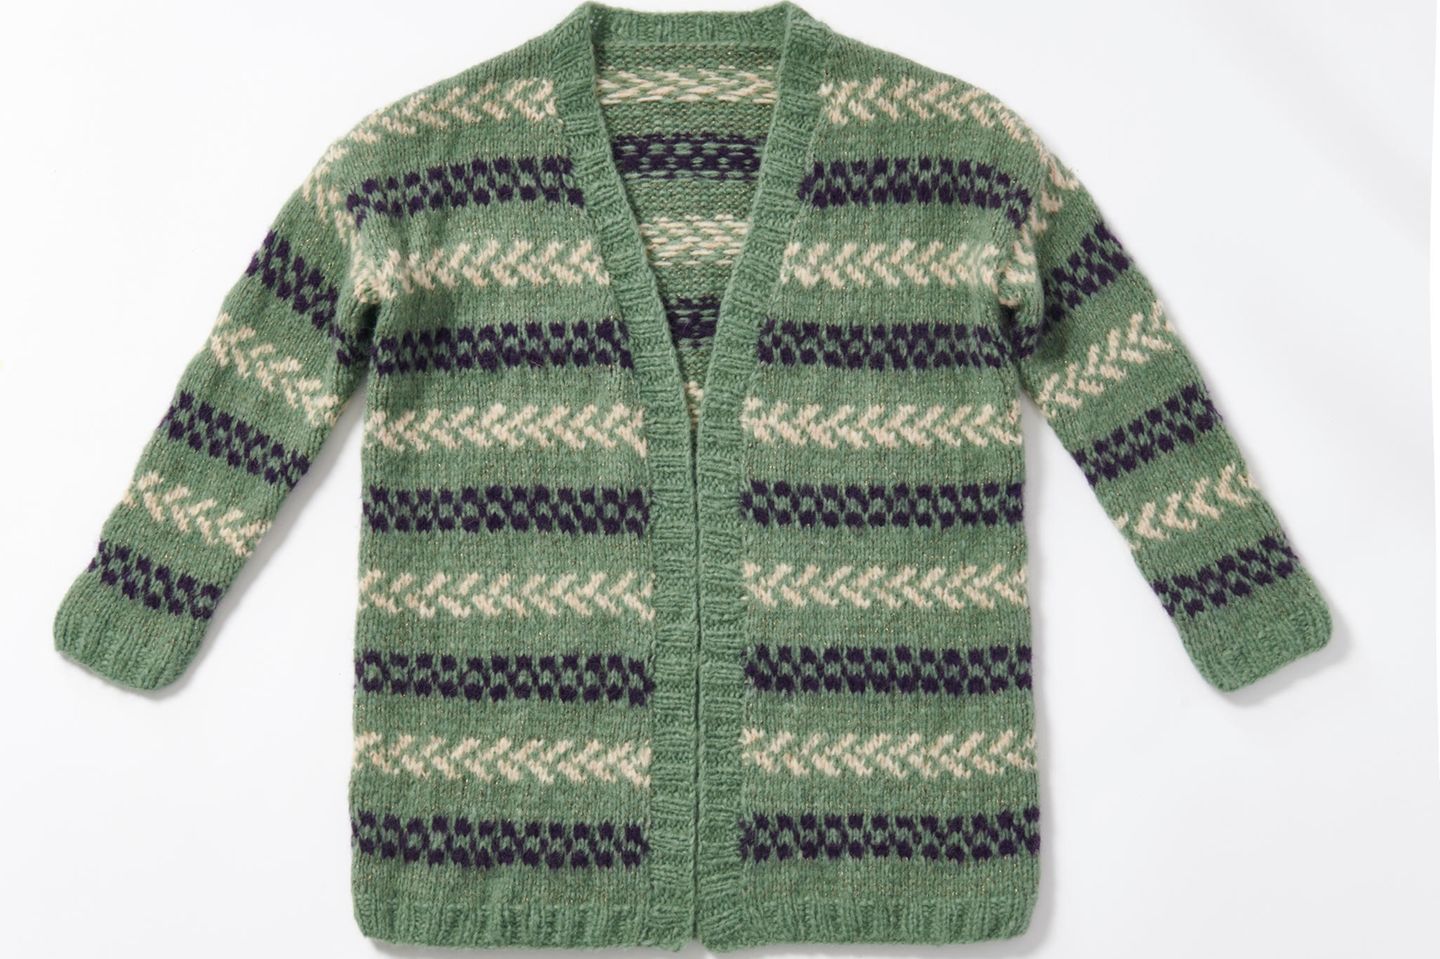 Norweger-Jacke stricken: grüne Strickjacke